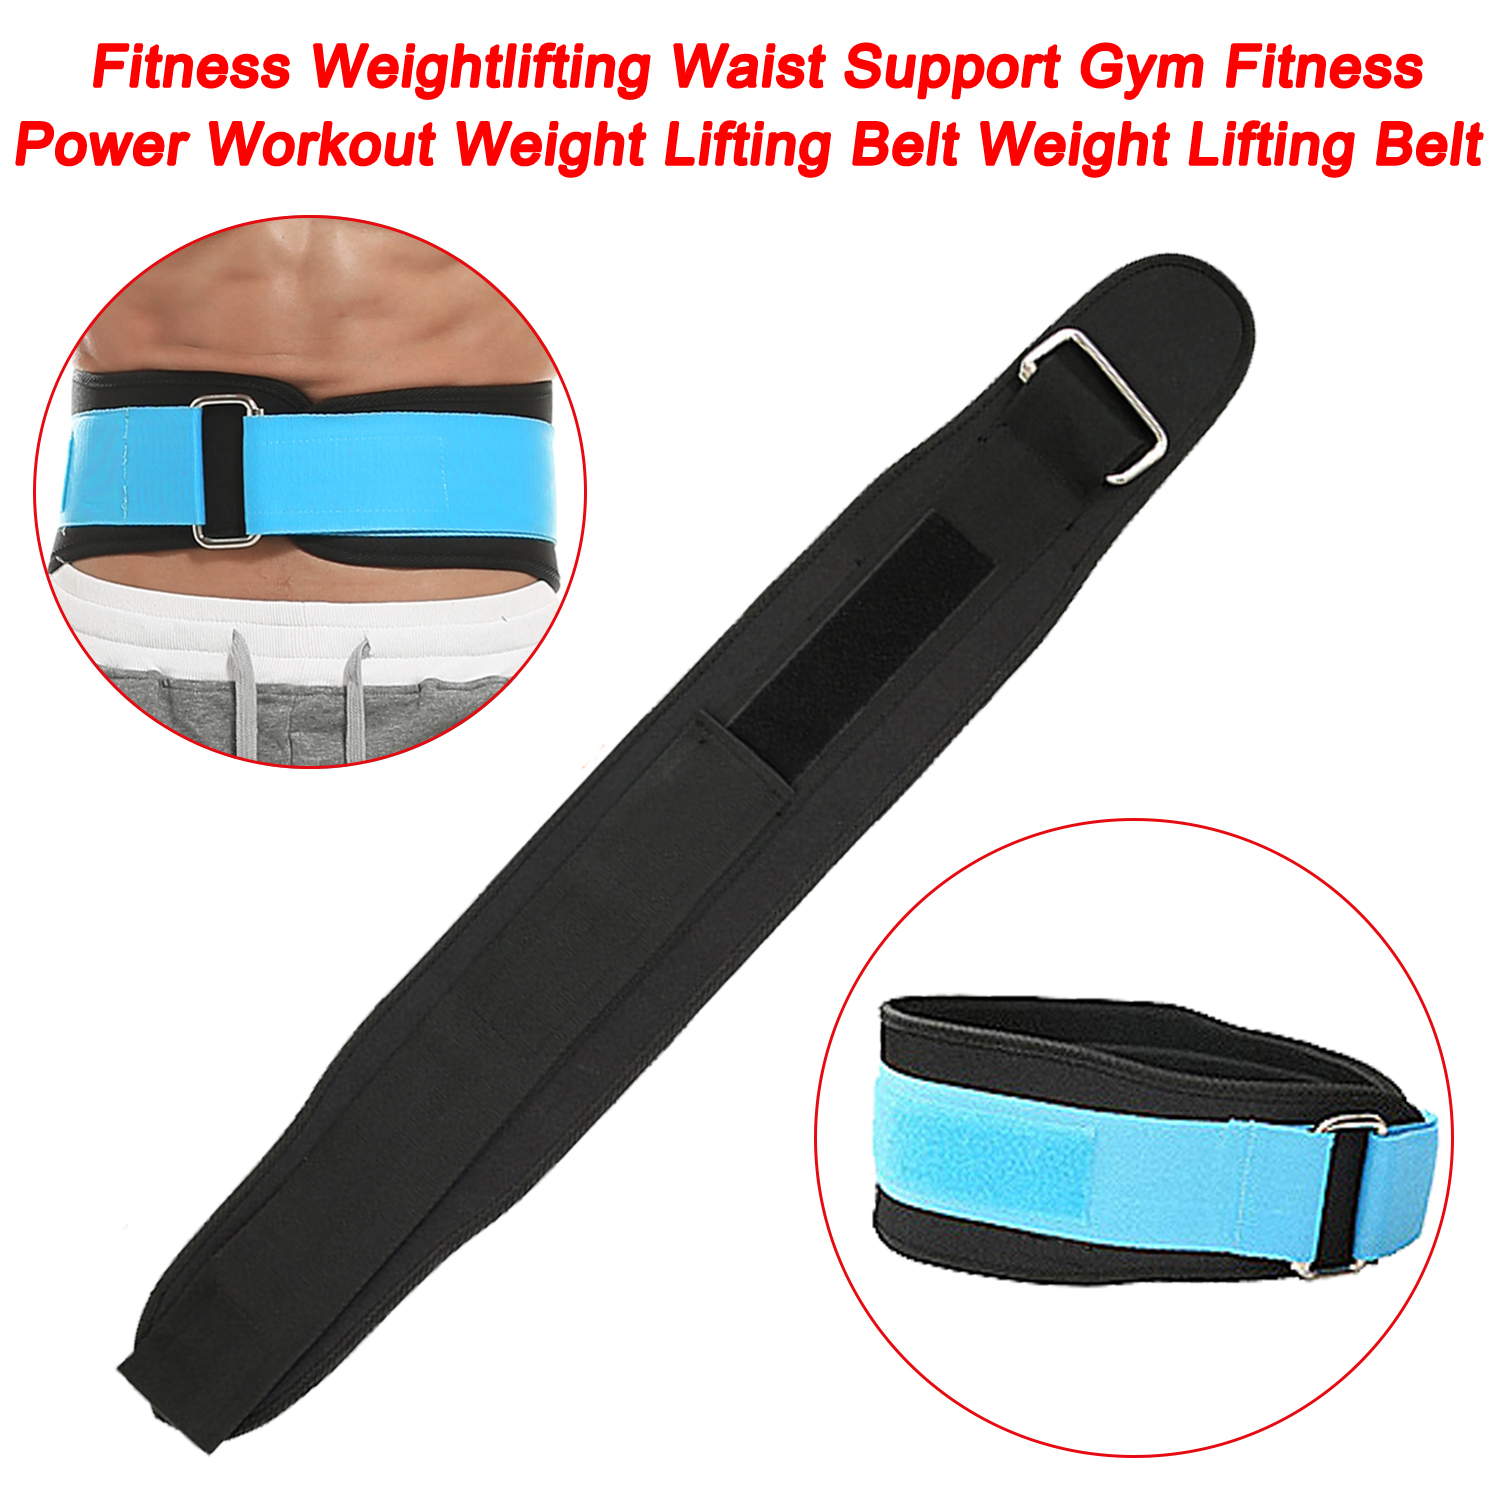 Fitness Weightlifting Waist Support Gym Fitness Power Workout Weight Lifting Belt Factory Customized Weight Lifting Belt